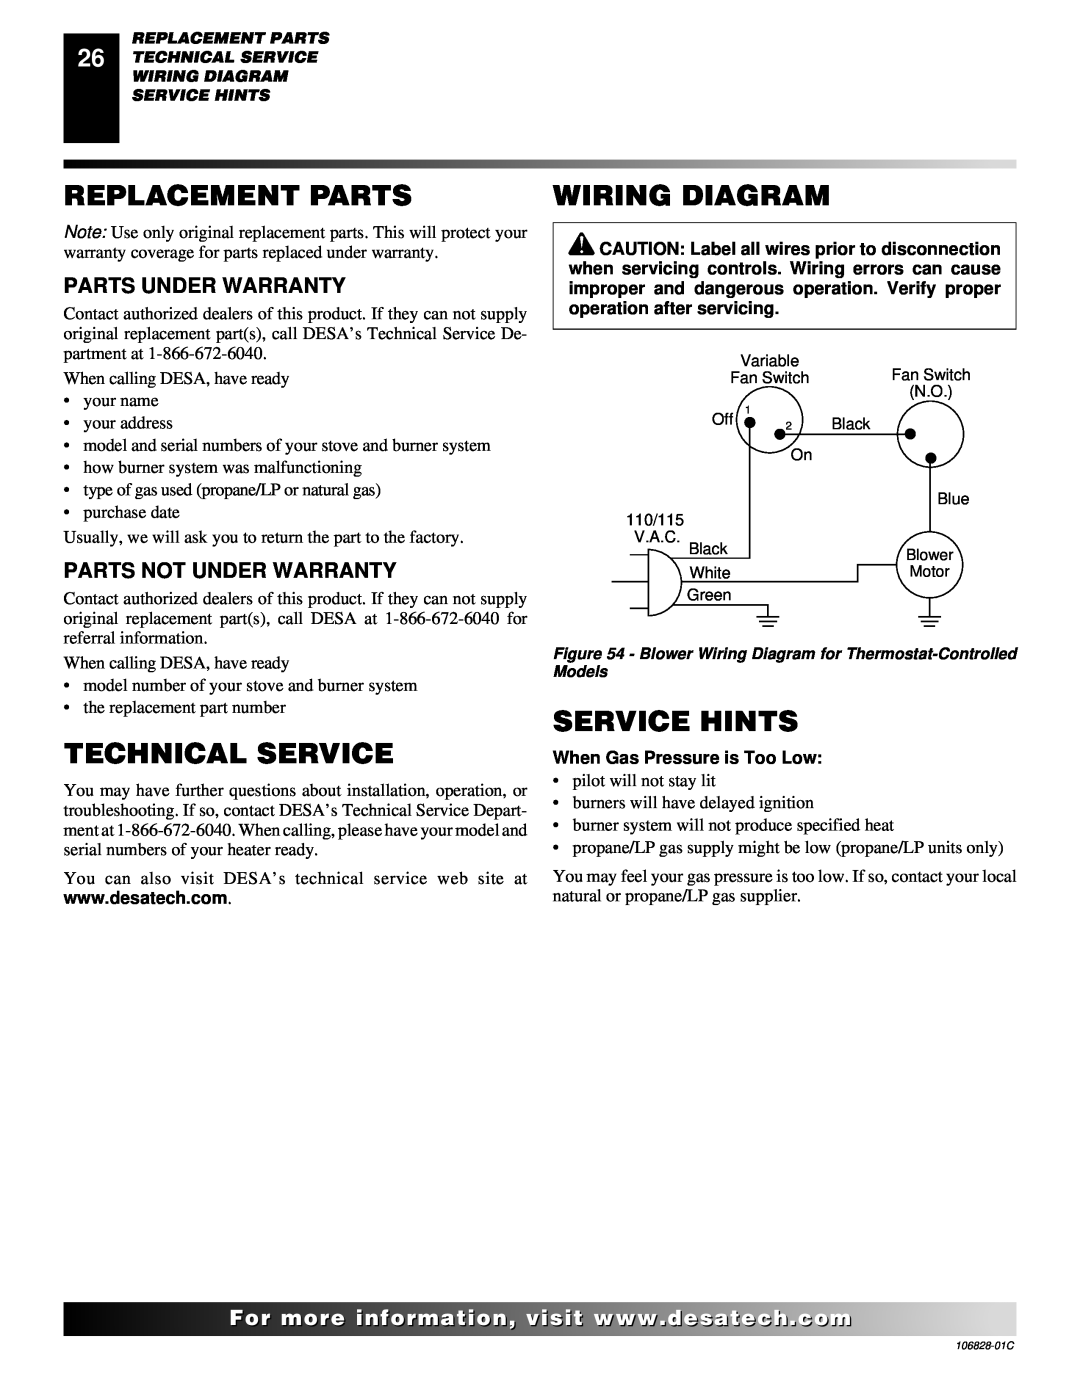 Desa SBVBN(C) Replacement Parts, Technical Service, Wiring Diagram, Service Hints, Parts Under Warranty, For..com 